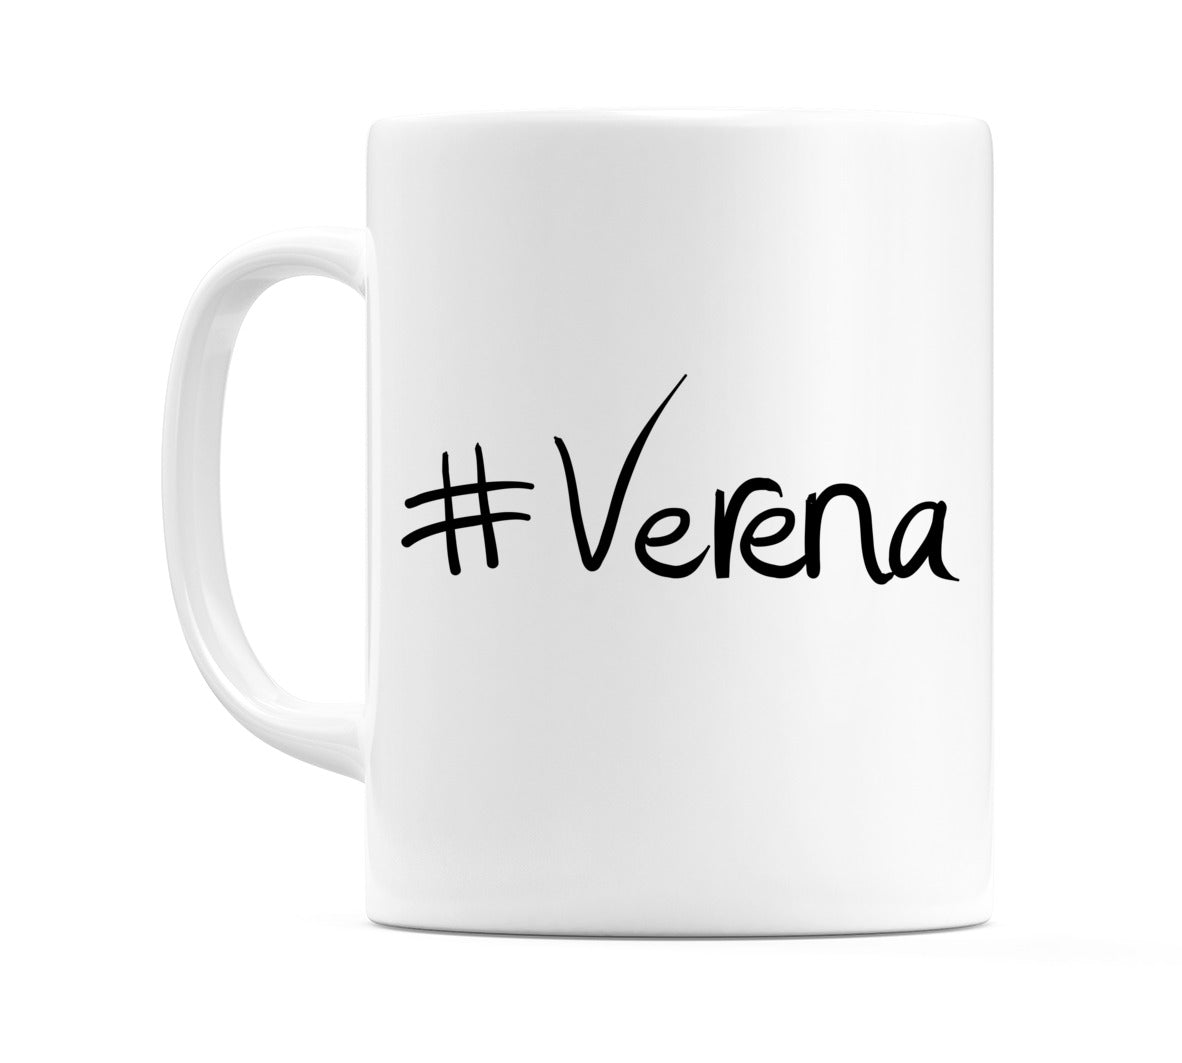 #Verena Mug